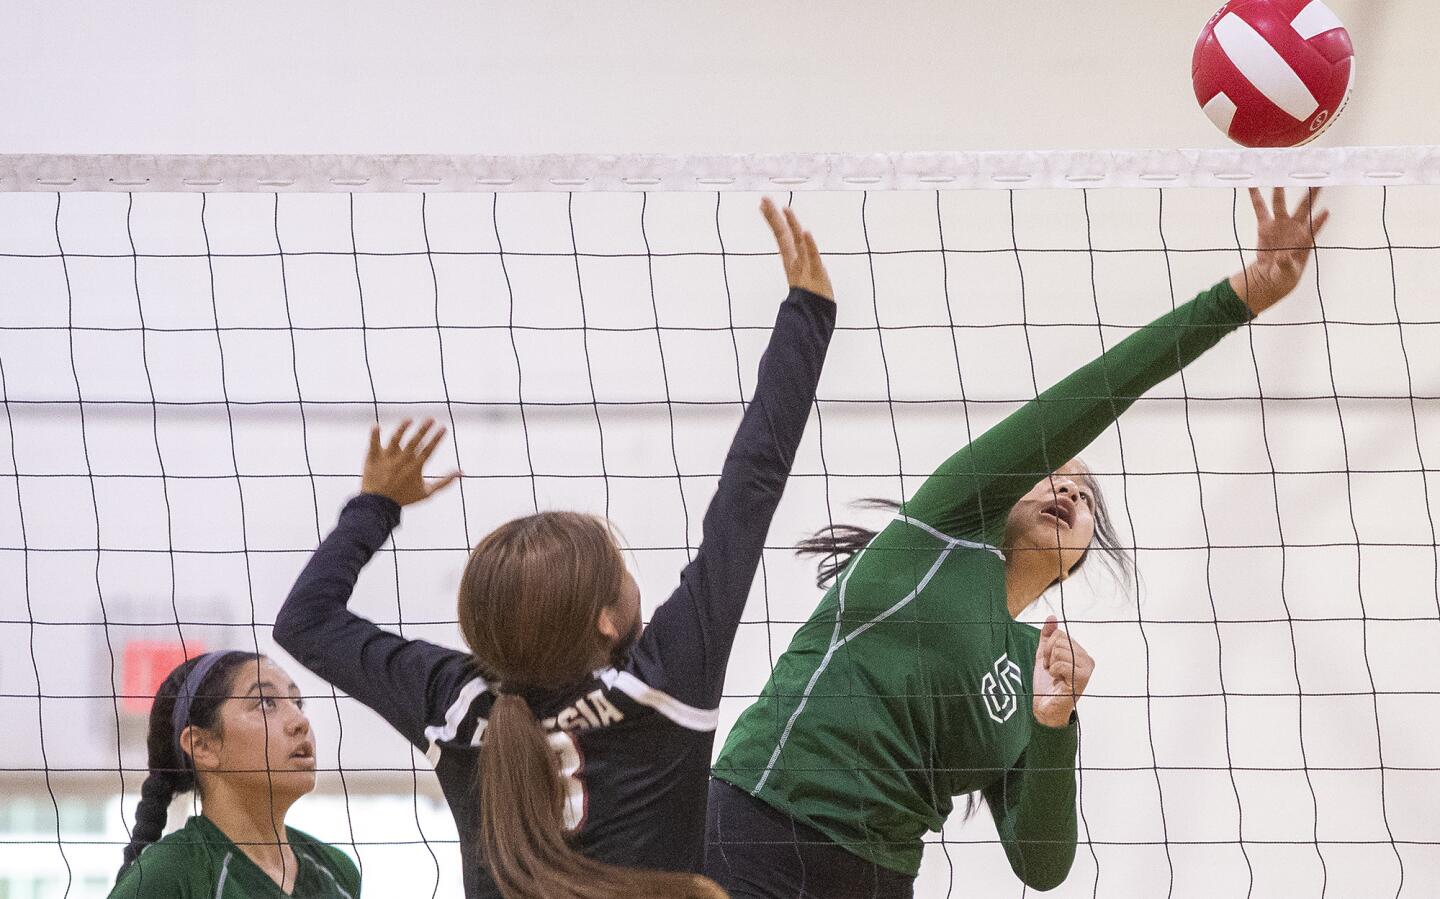 Photo Gallery: Costa Mesa vs. Artesia in a girls' volleyball match